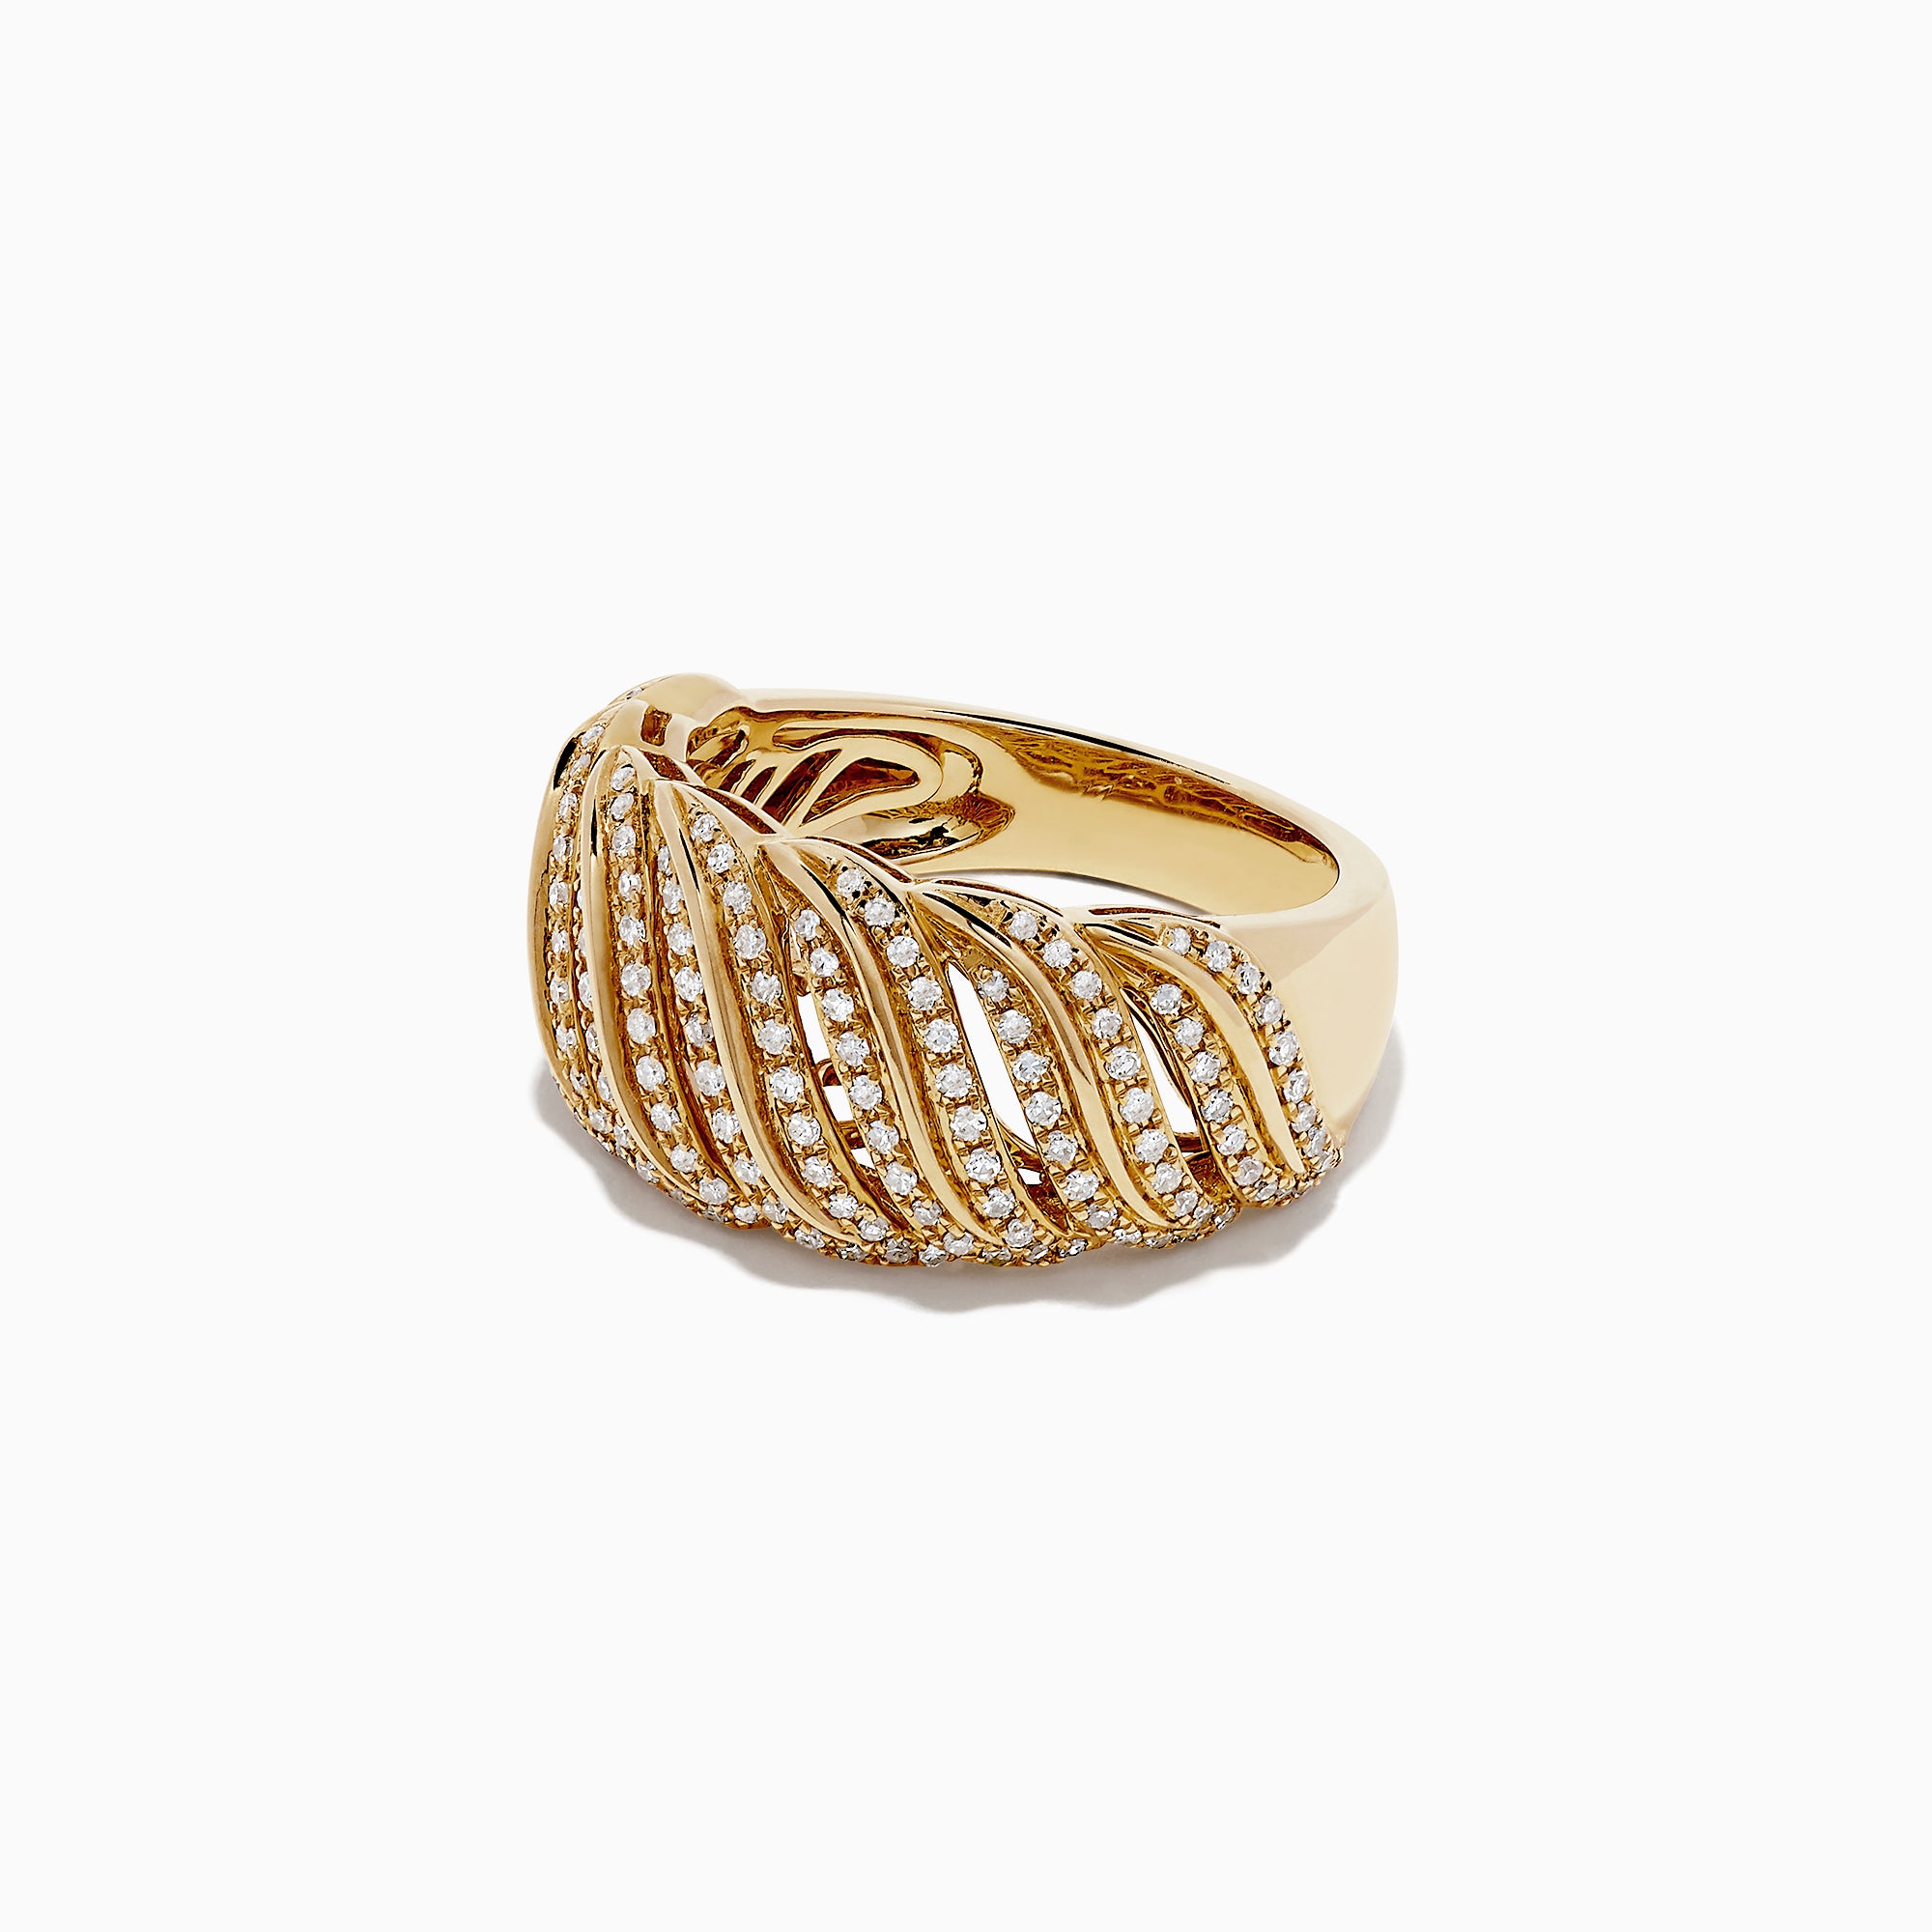 Indian Ring 7 Wedding 22K Gold Plated Finger Ring Designer Mother's Gift  Jewelry | eBay